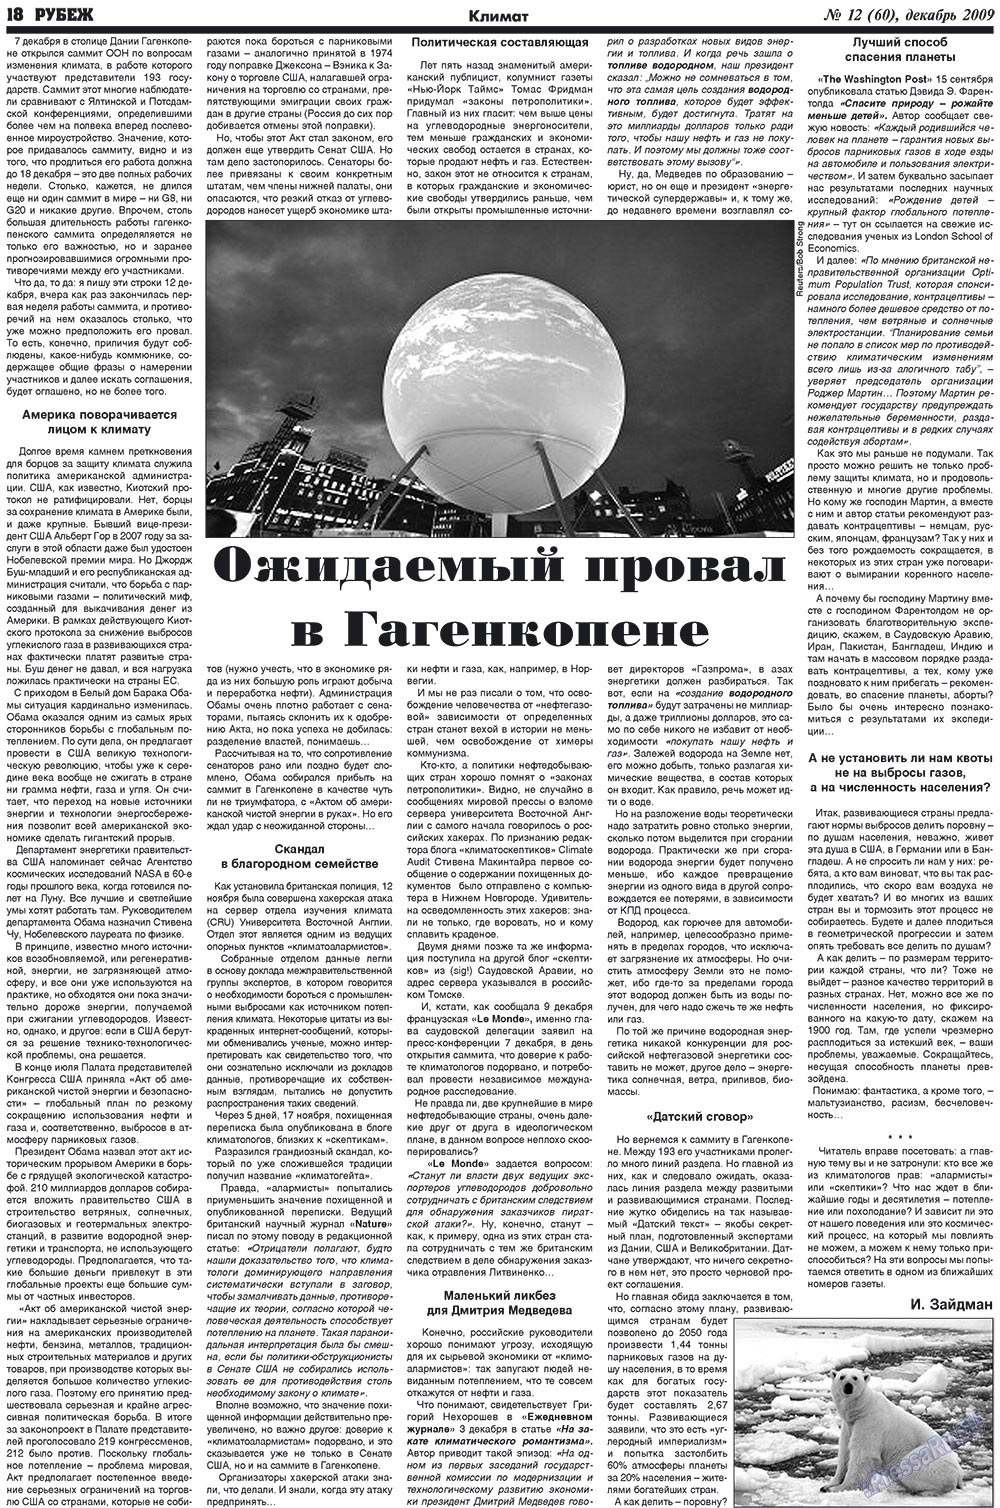 Рубеж, газета. 2009 №12 стр.18